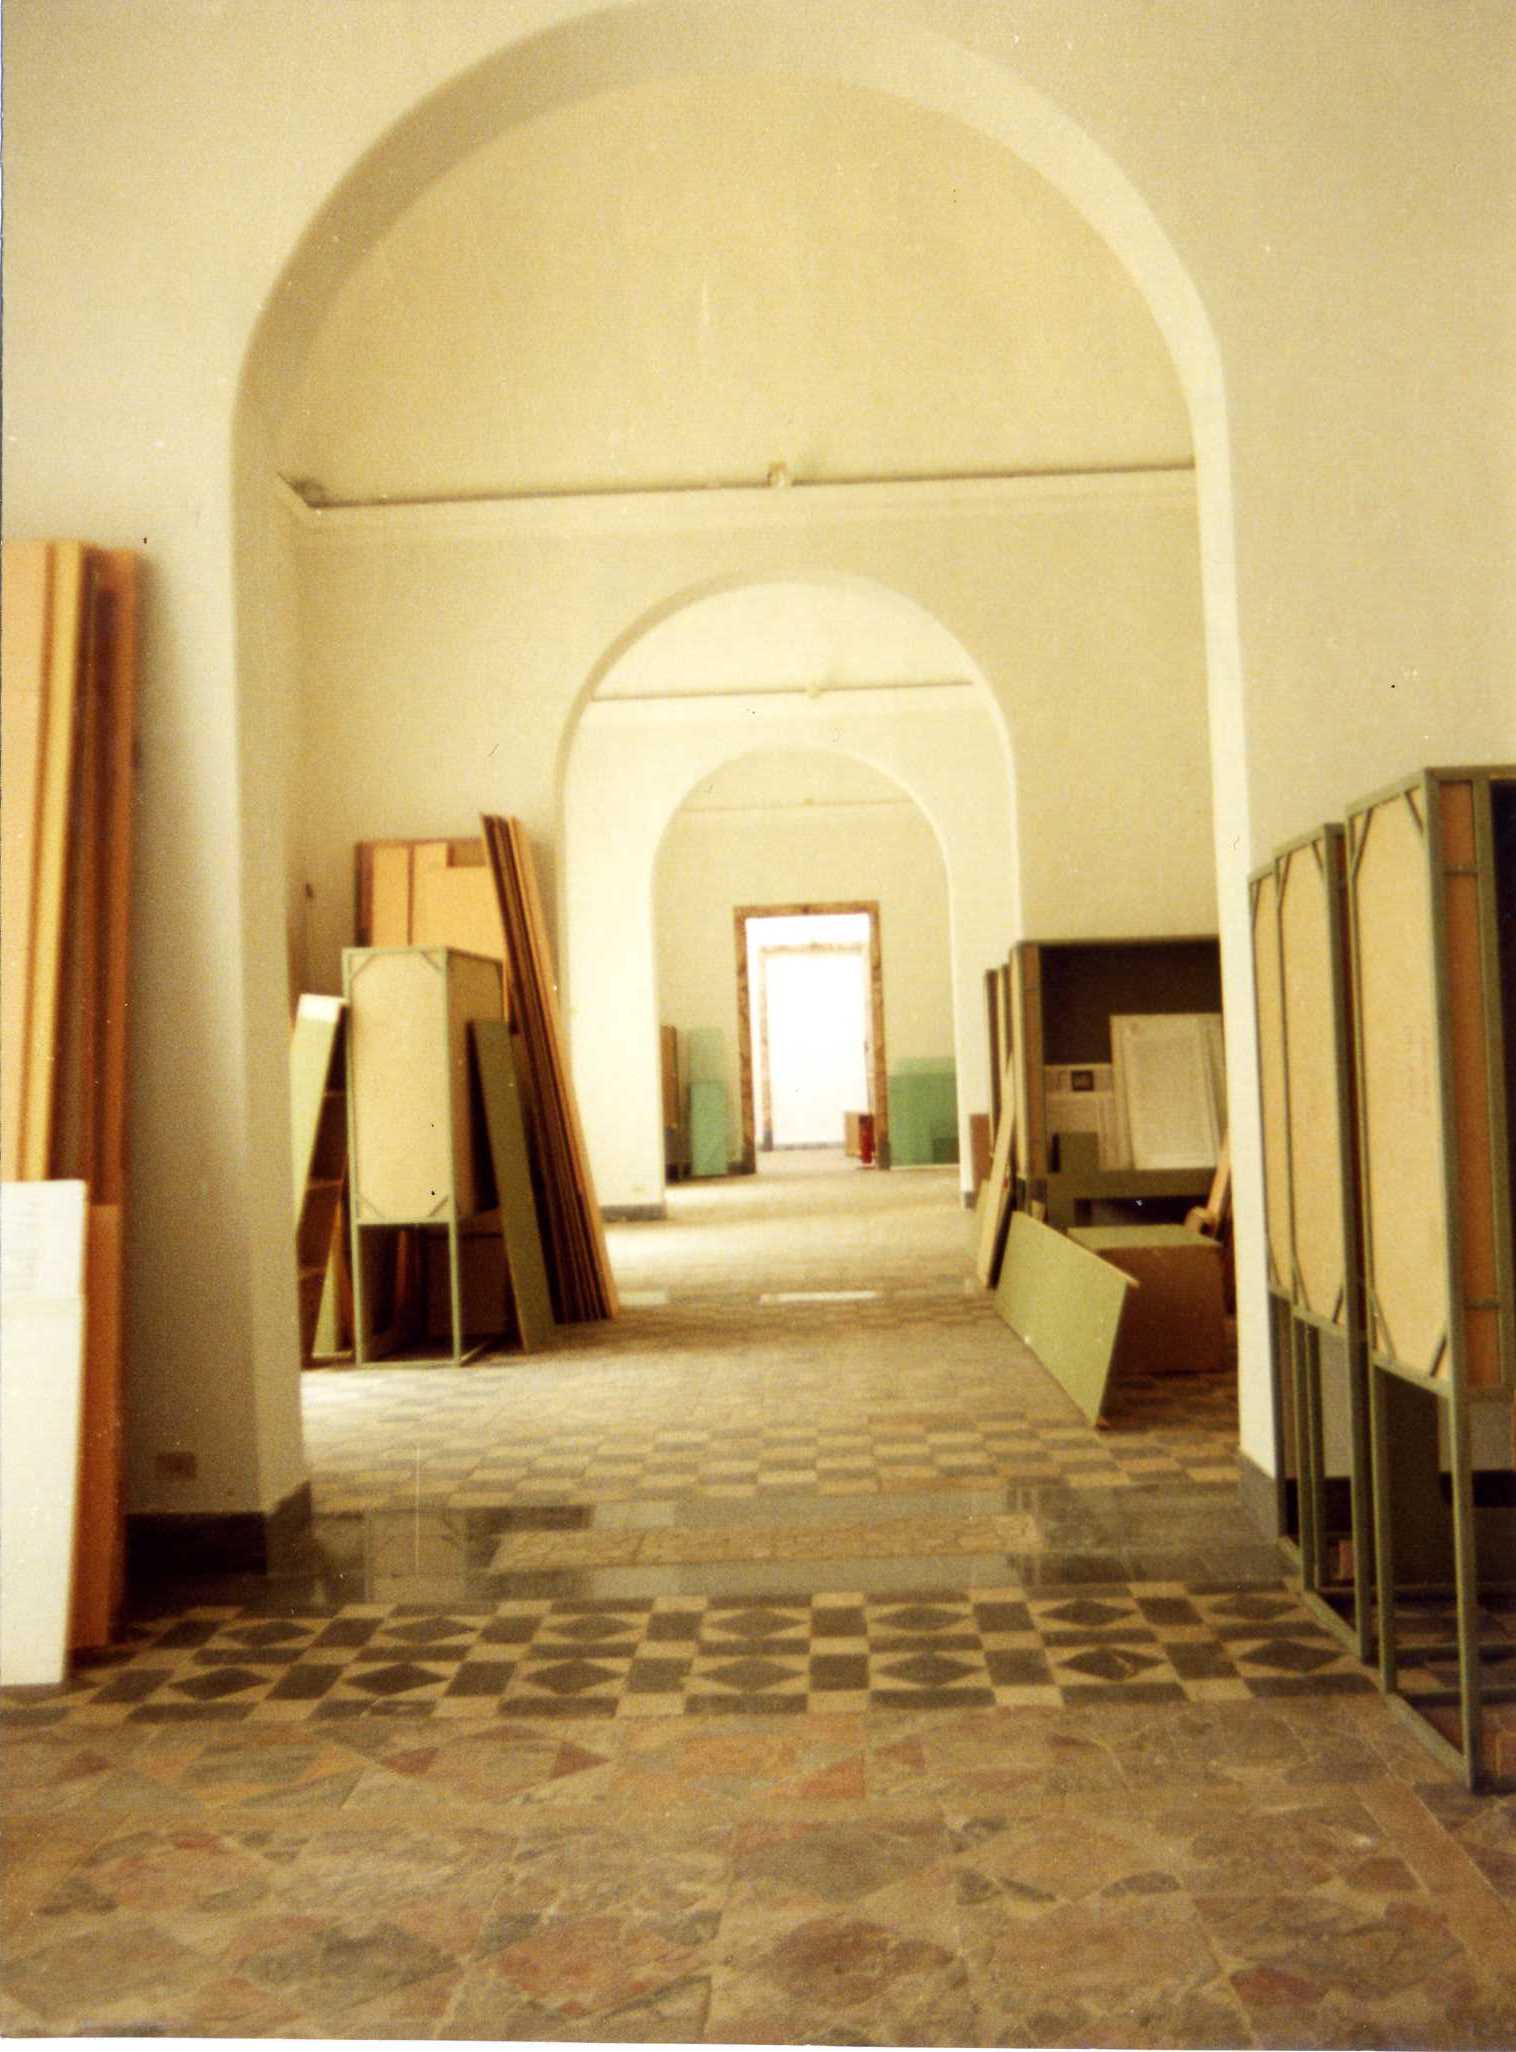 MANN - ala occidentale sopraelevazione (museo, archeologico) - Napoli (NA) 